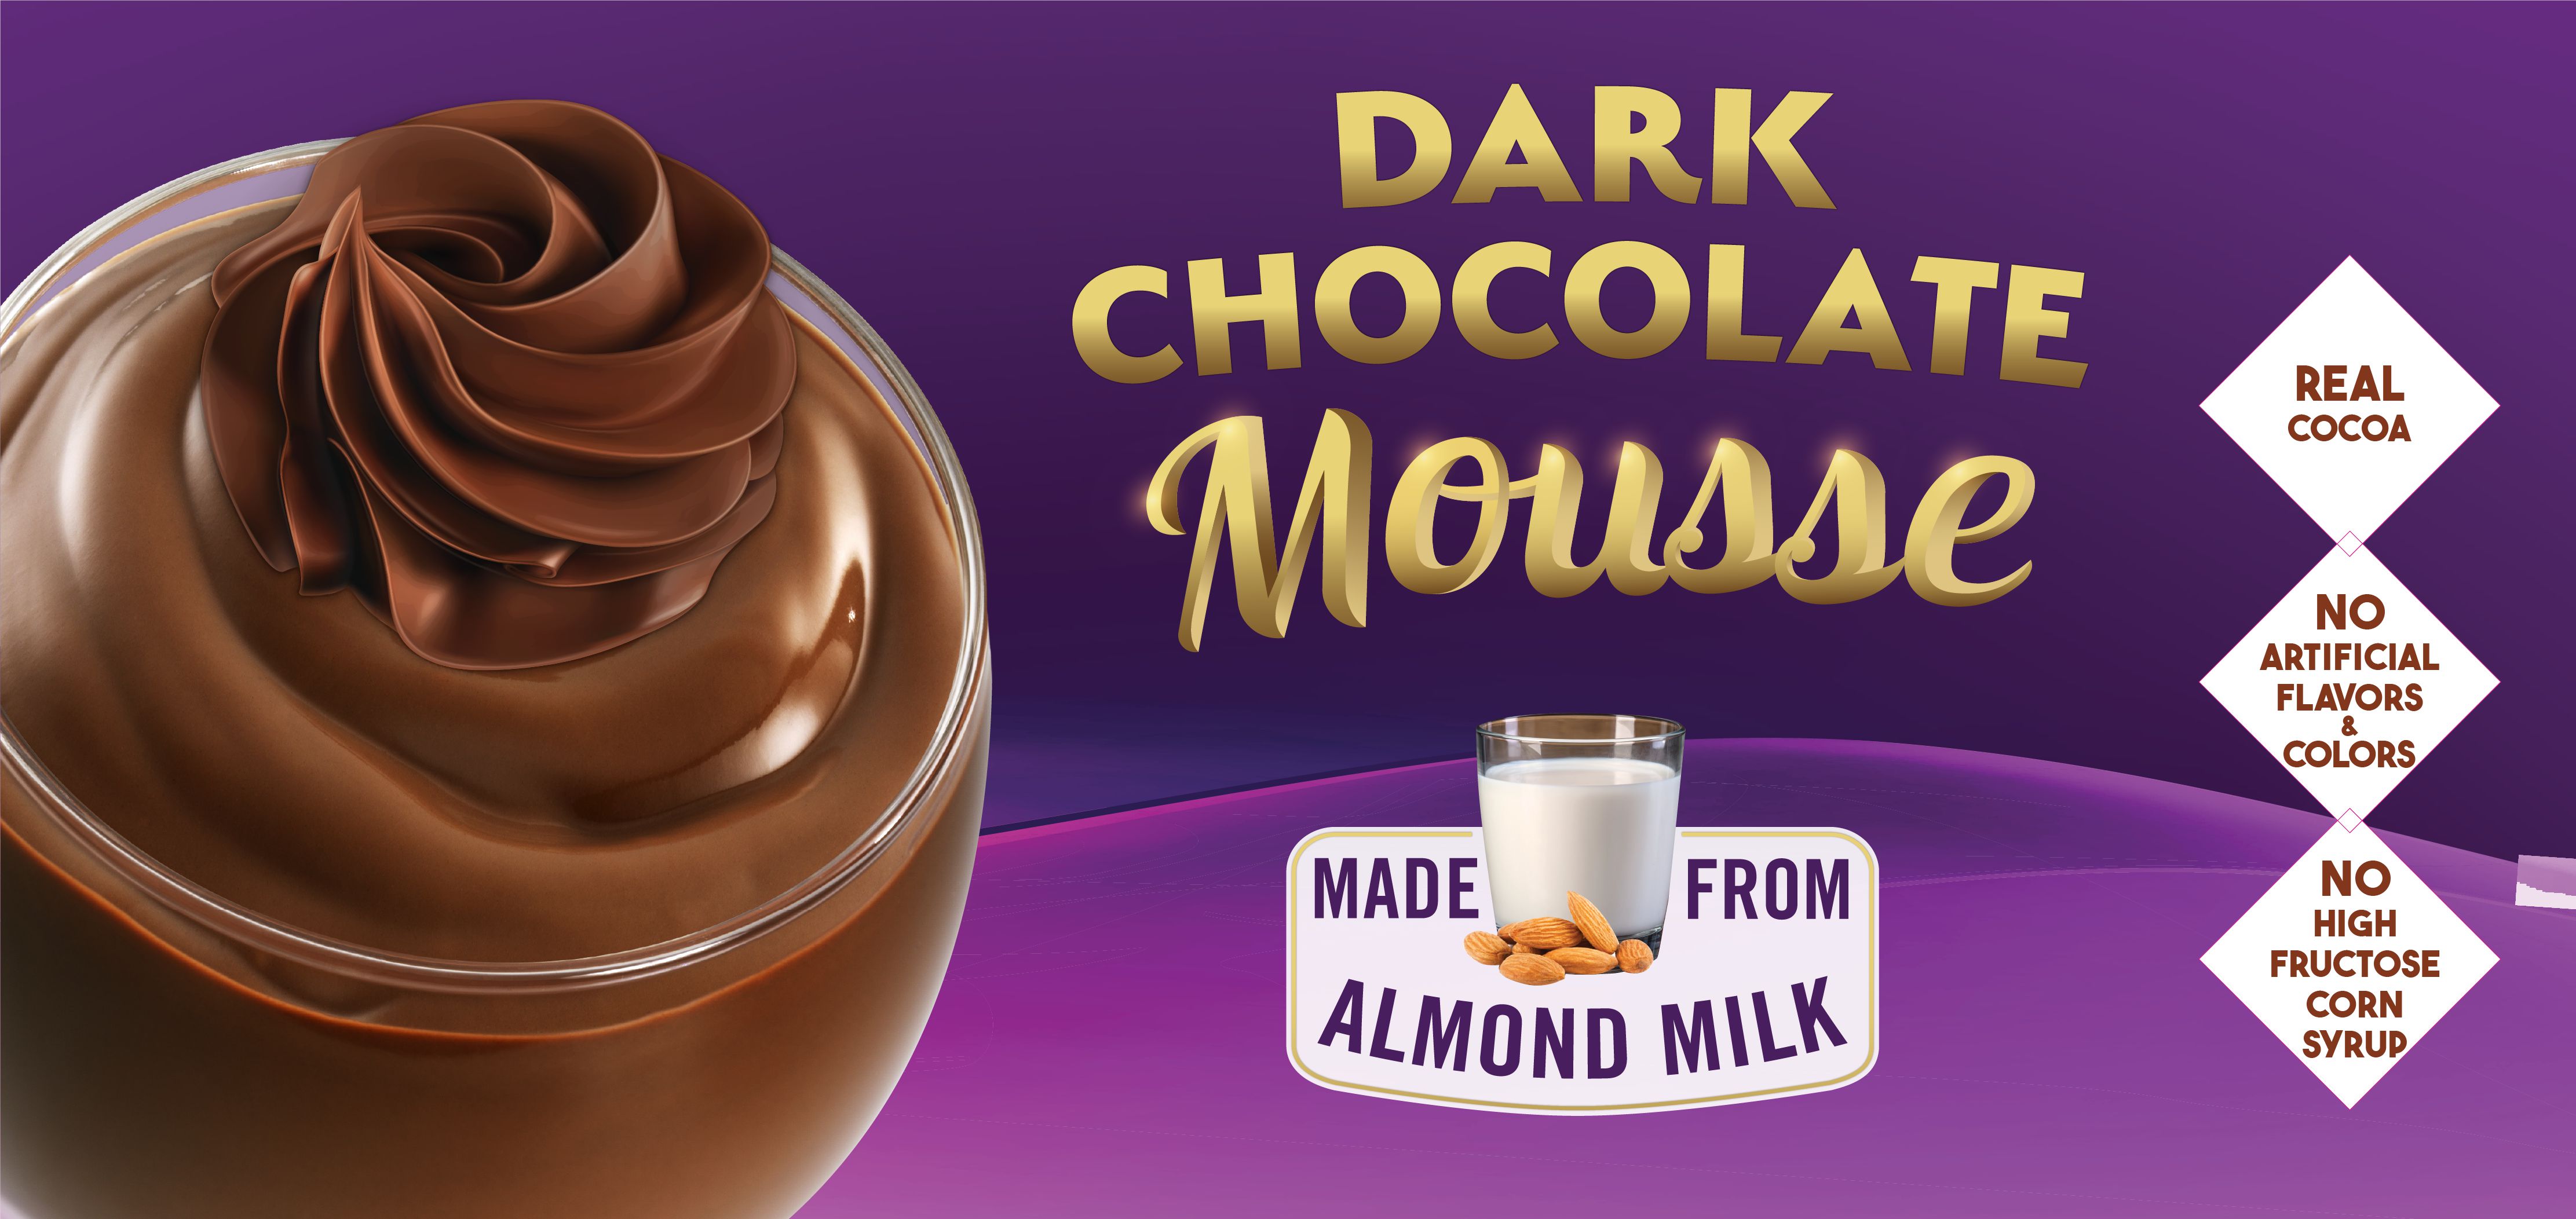 vegan dark chocolate mousse made from almond milk label image